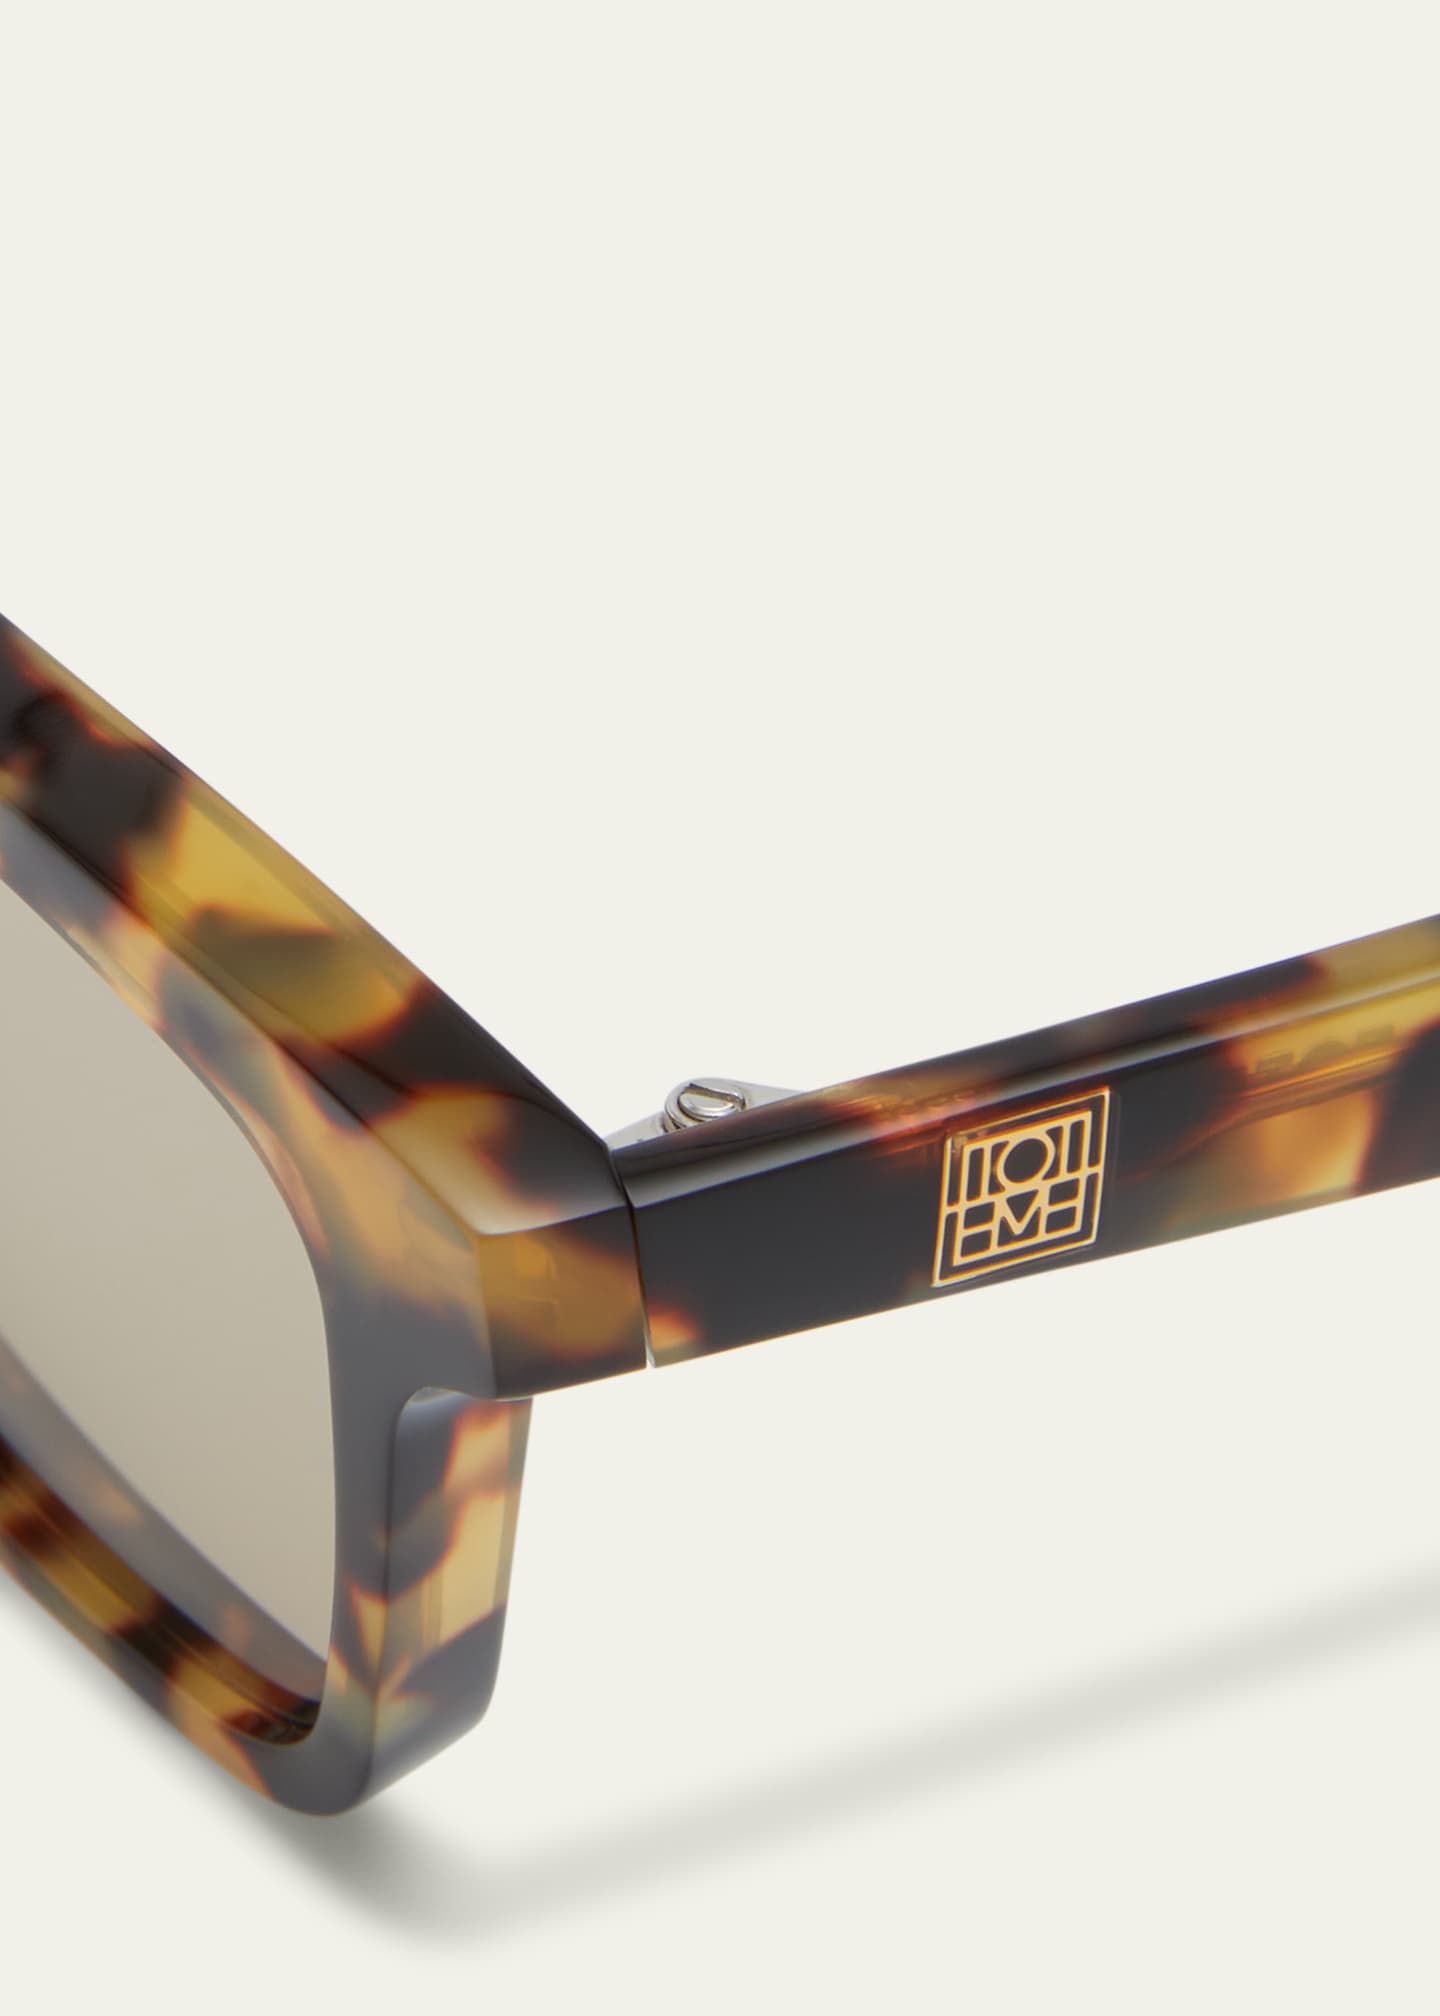 The Squares square-frame acetate sunglasses